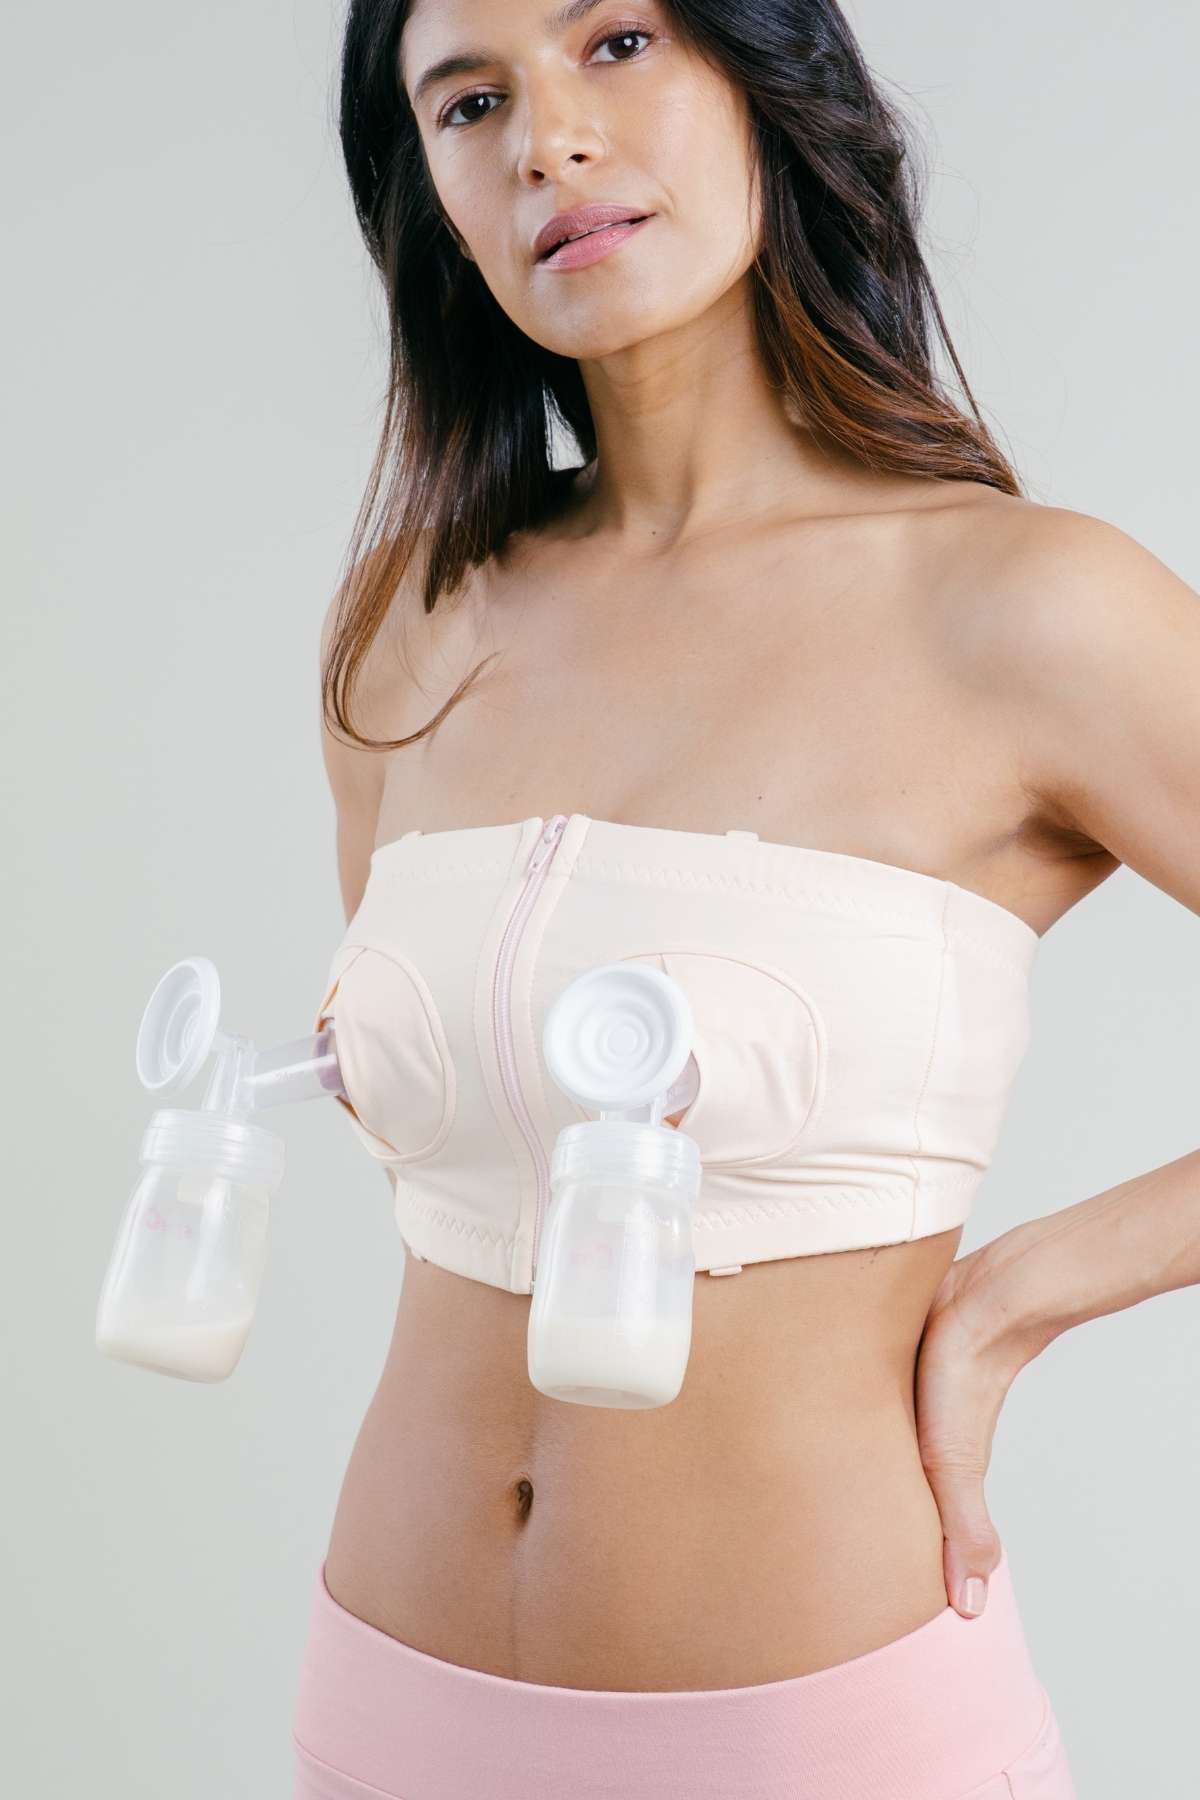 Best Pumping Bra For Spectra  Pumping bras, Free breast pump, Hands free  pumping